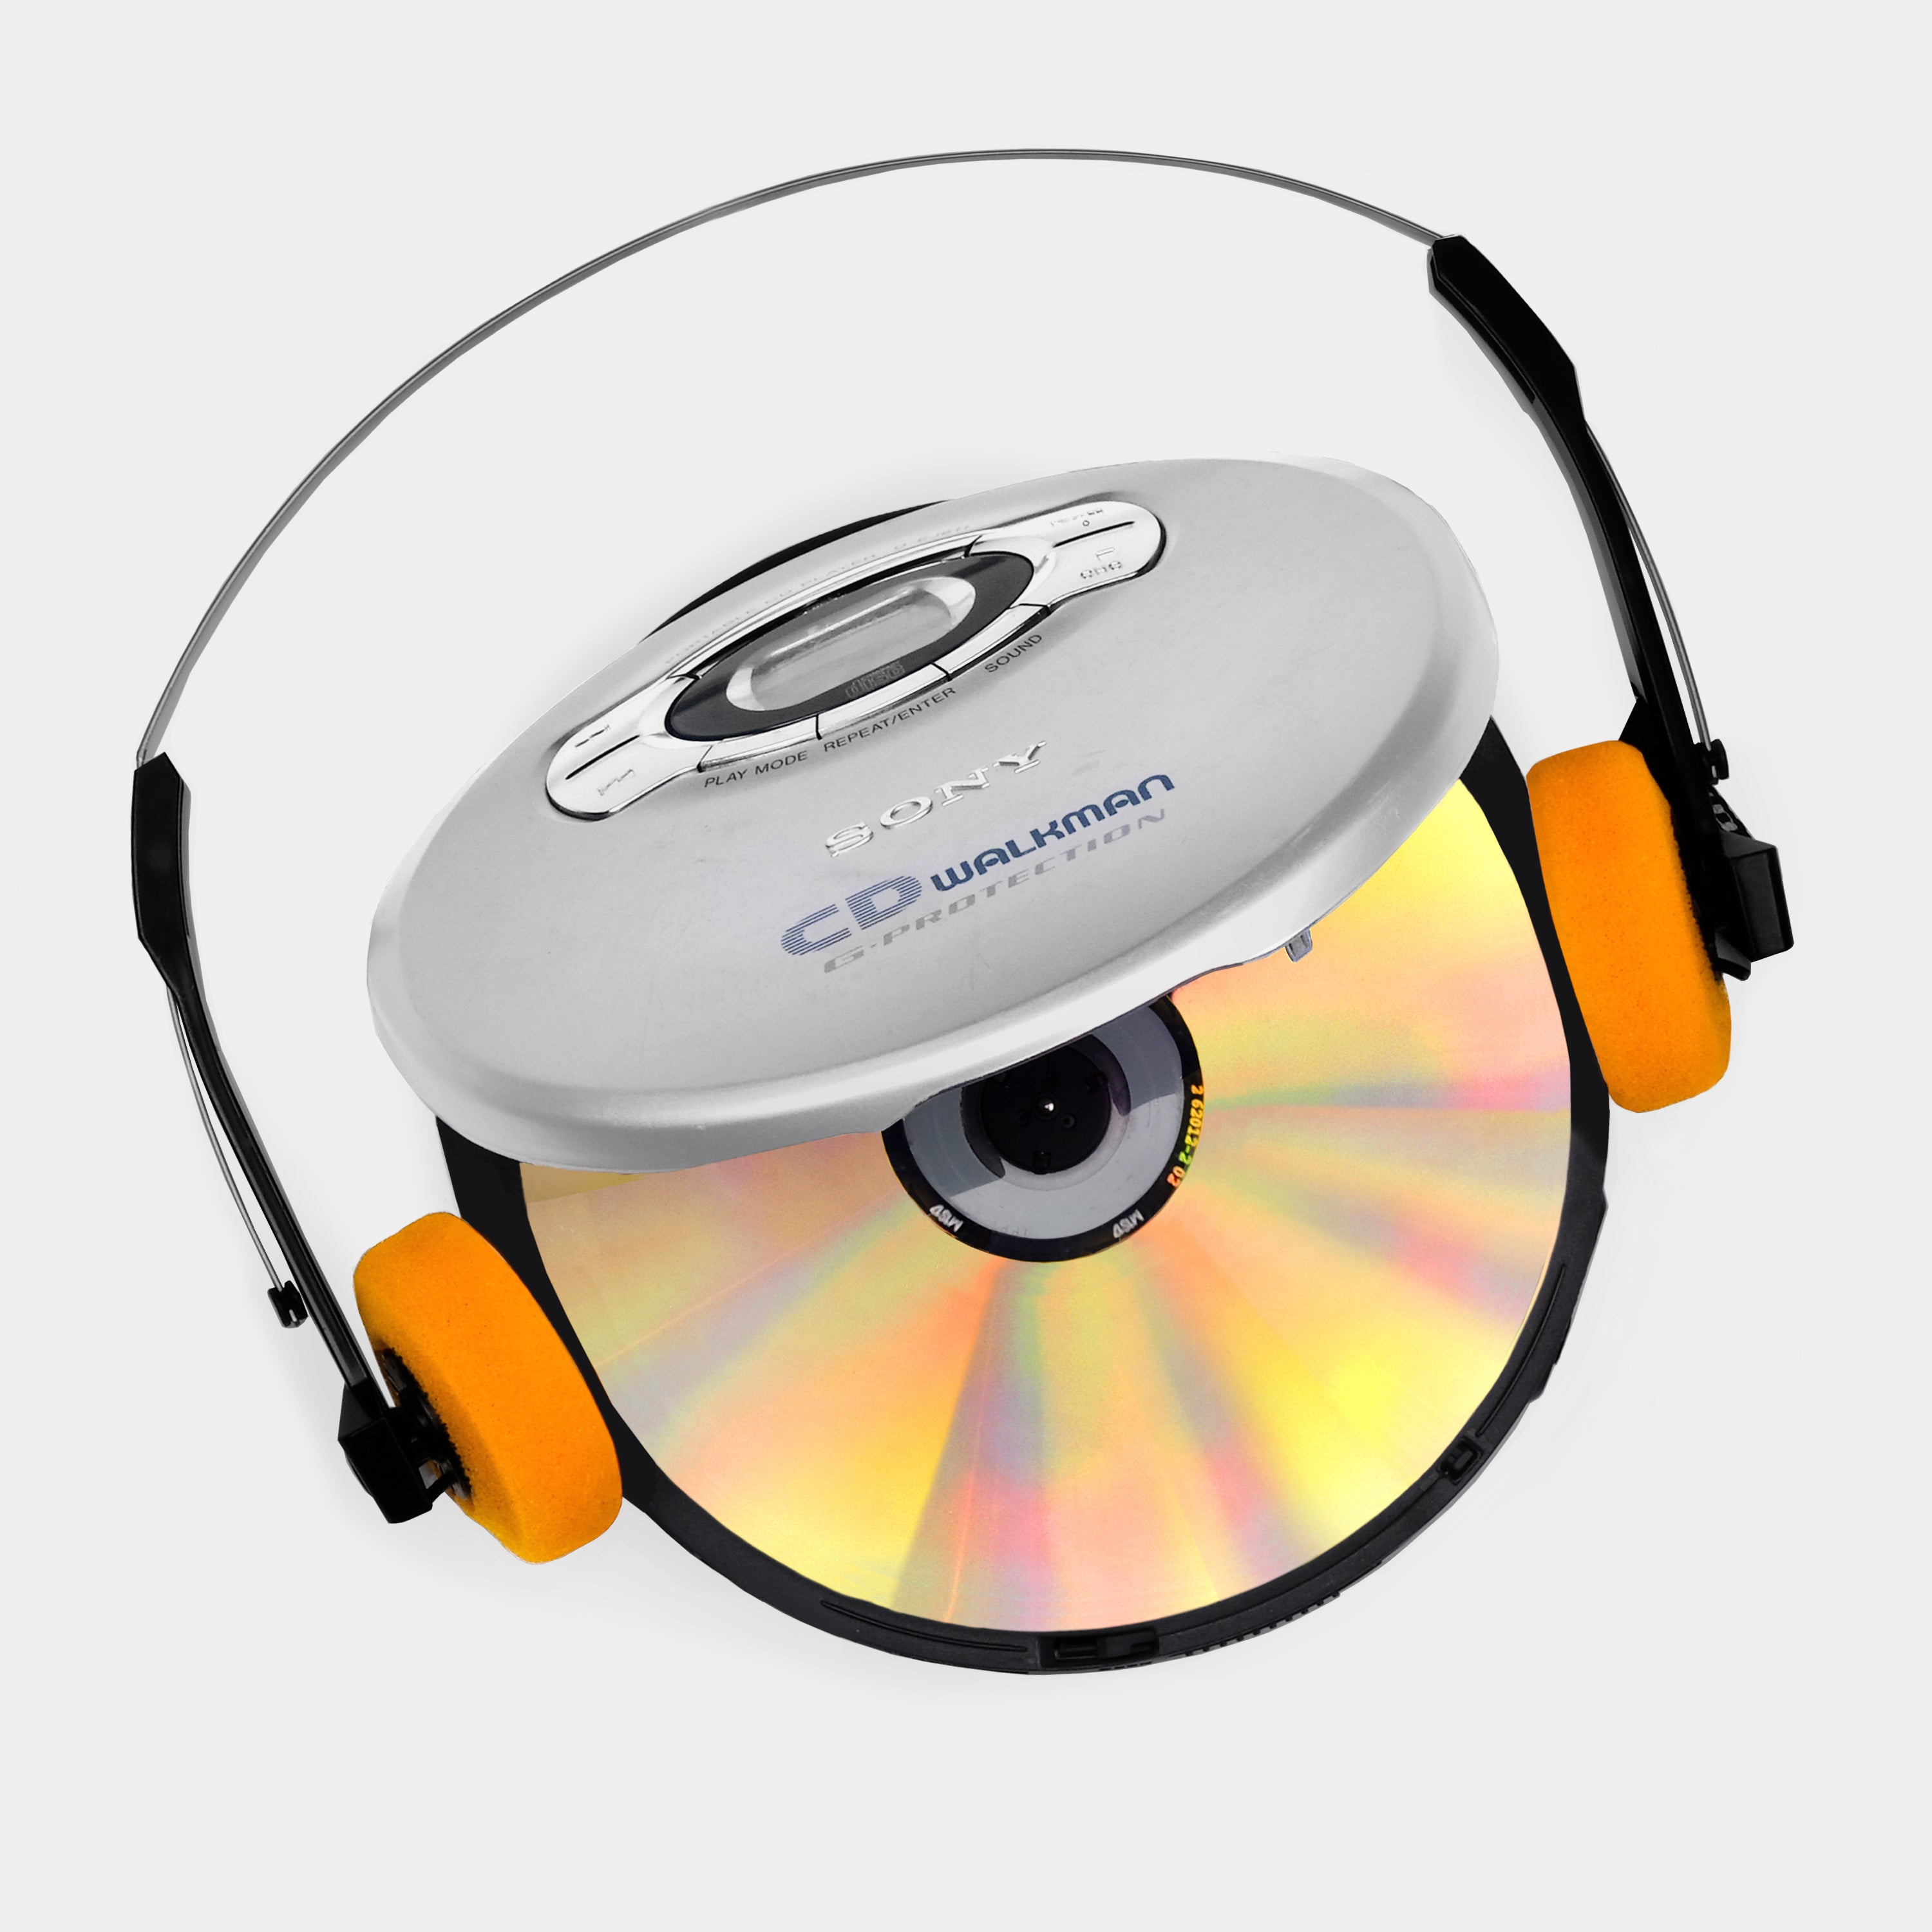 Sony Walkman D-EJ611 Portable CD Player